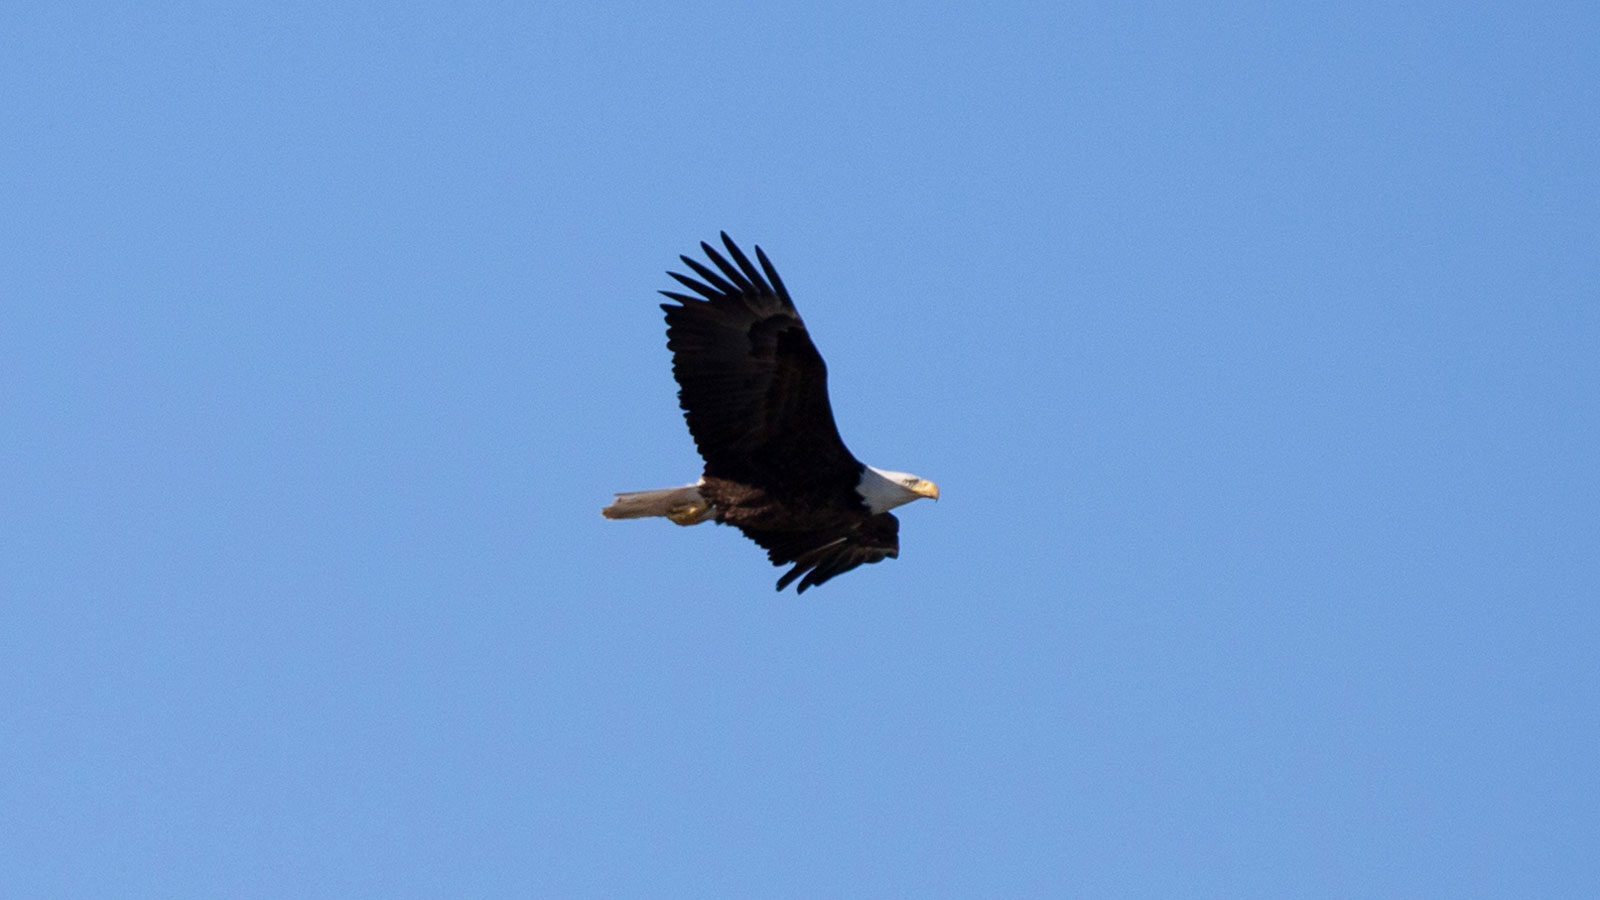 Bald eagle in flight through a blue sky